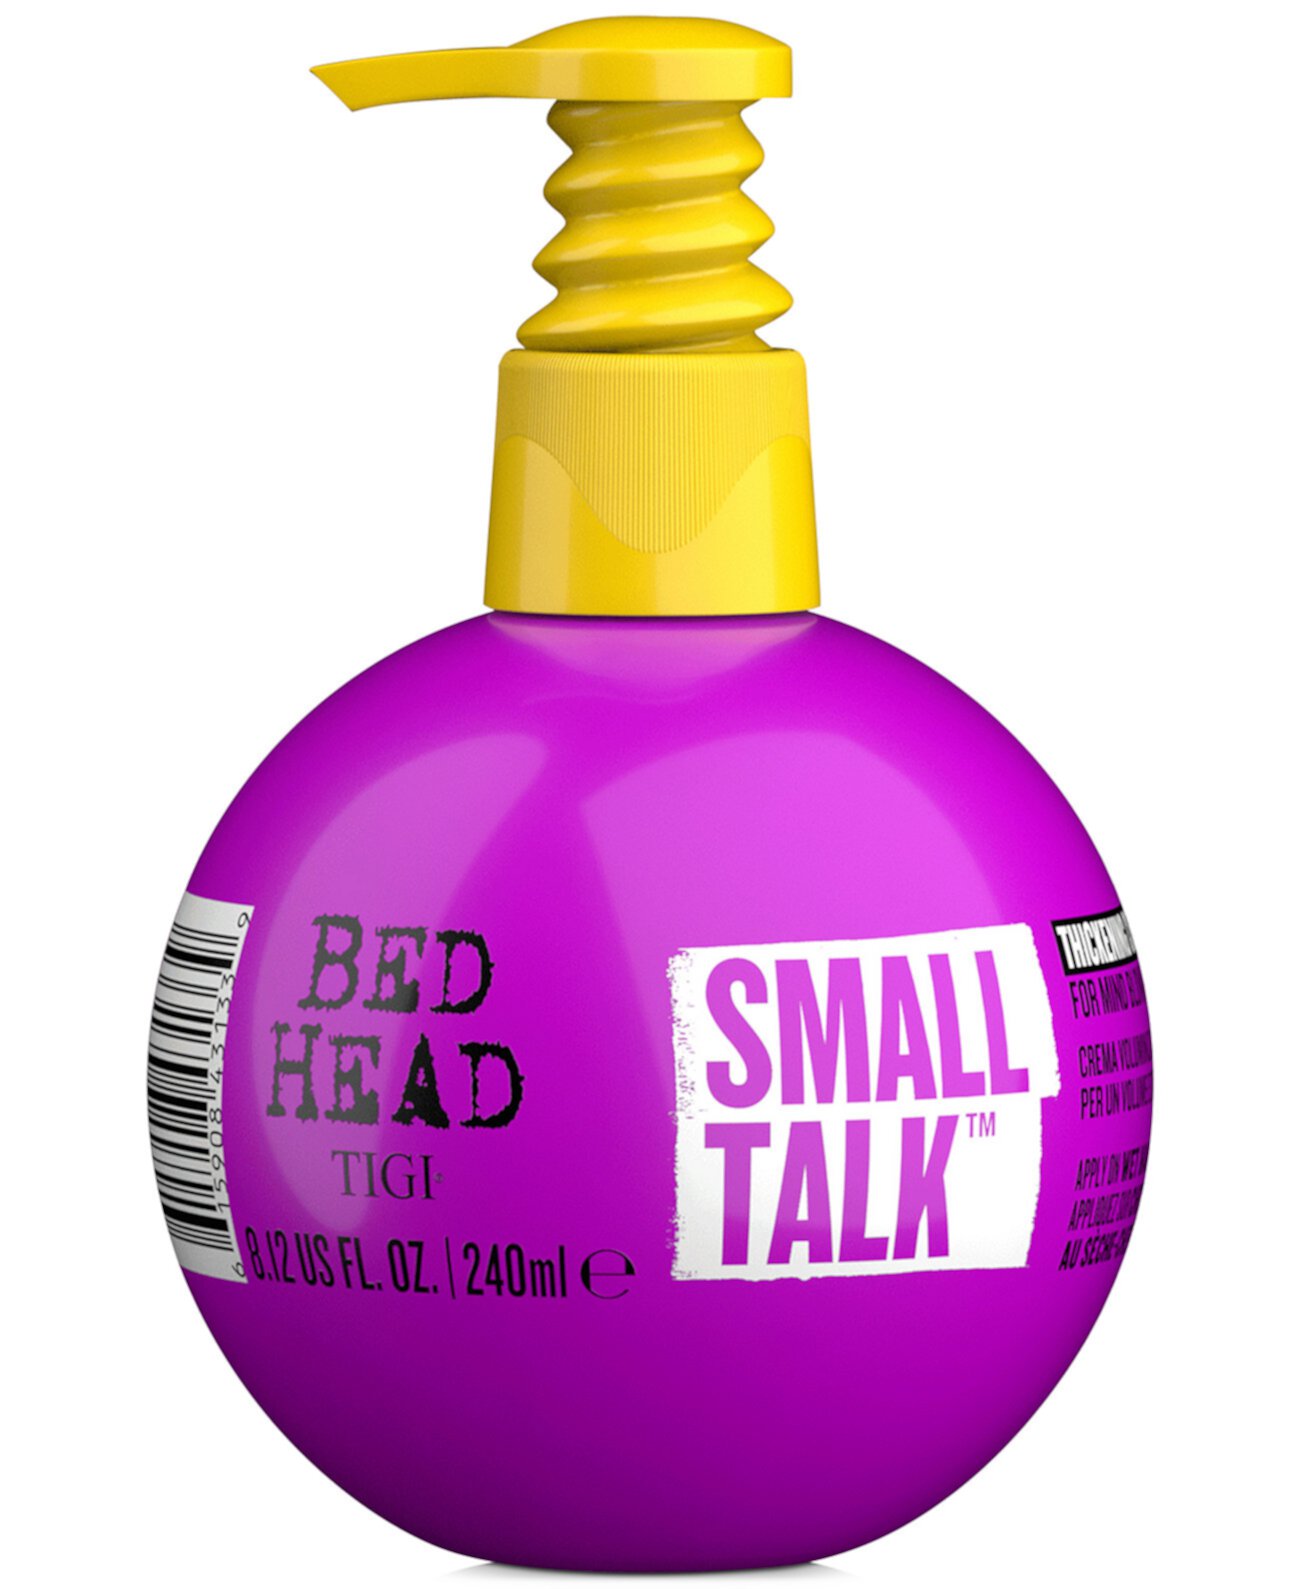 Bed Head Small Talk Cream, 8,12 унций, от PUREBEAUTY Salon & Spa TIGI